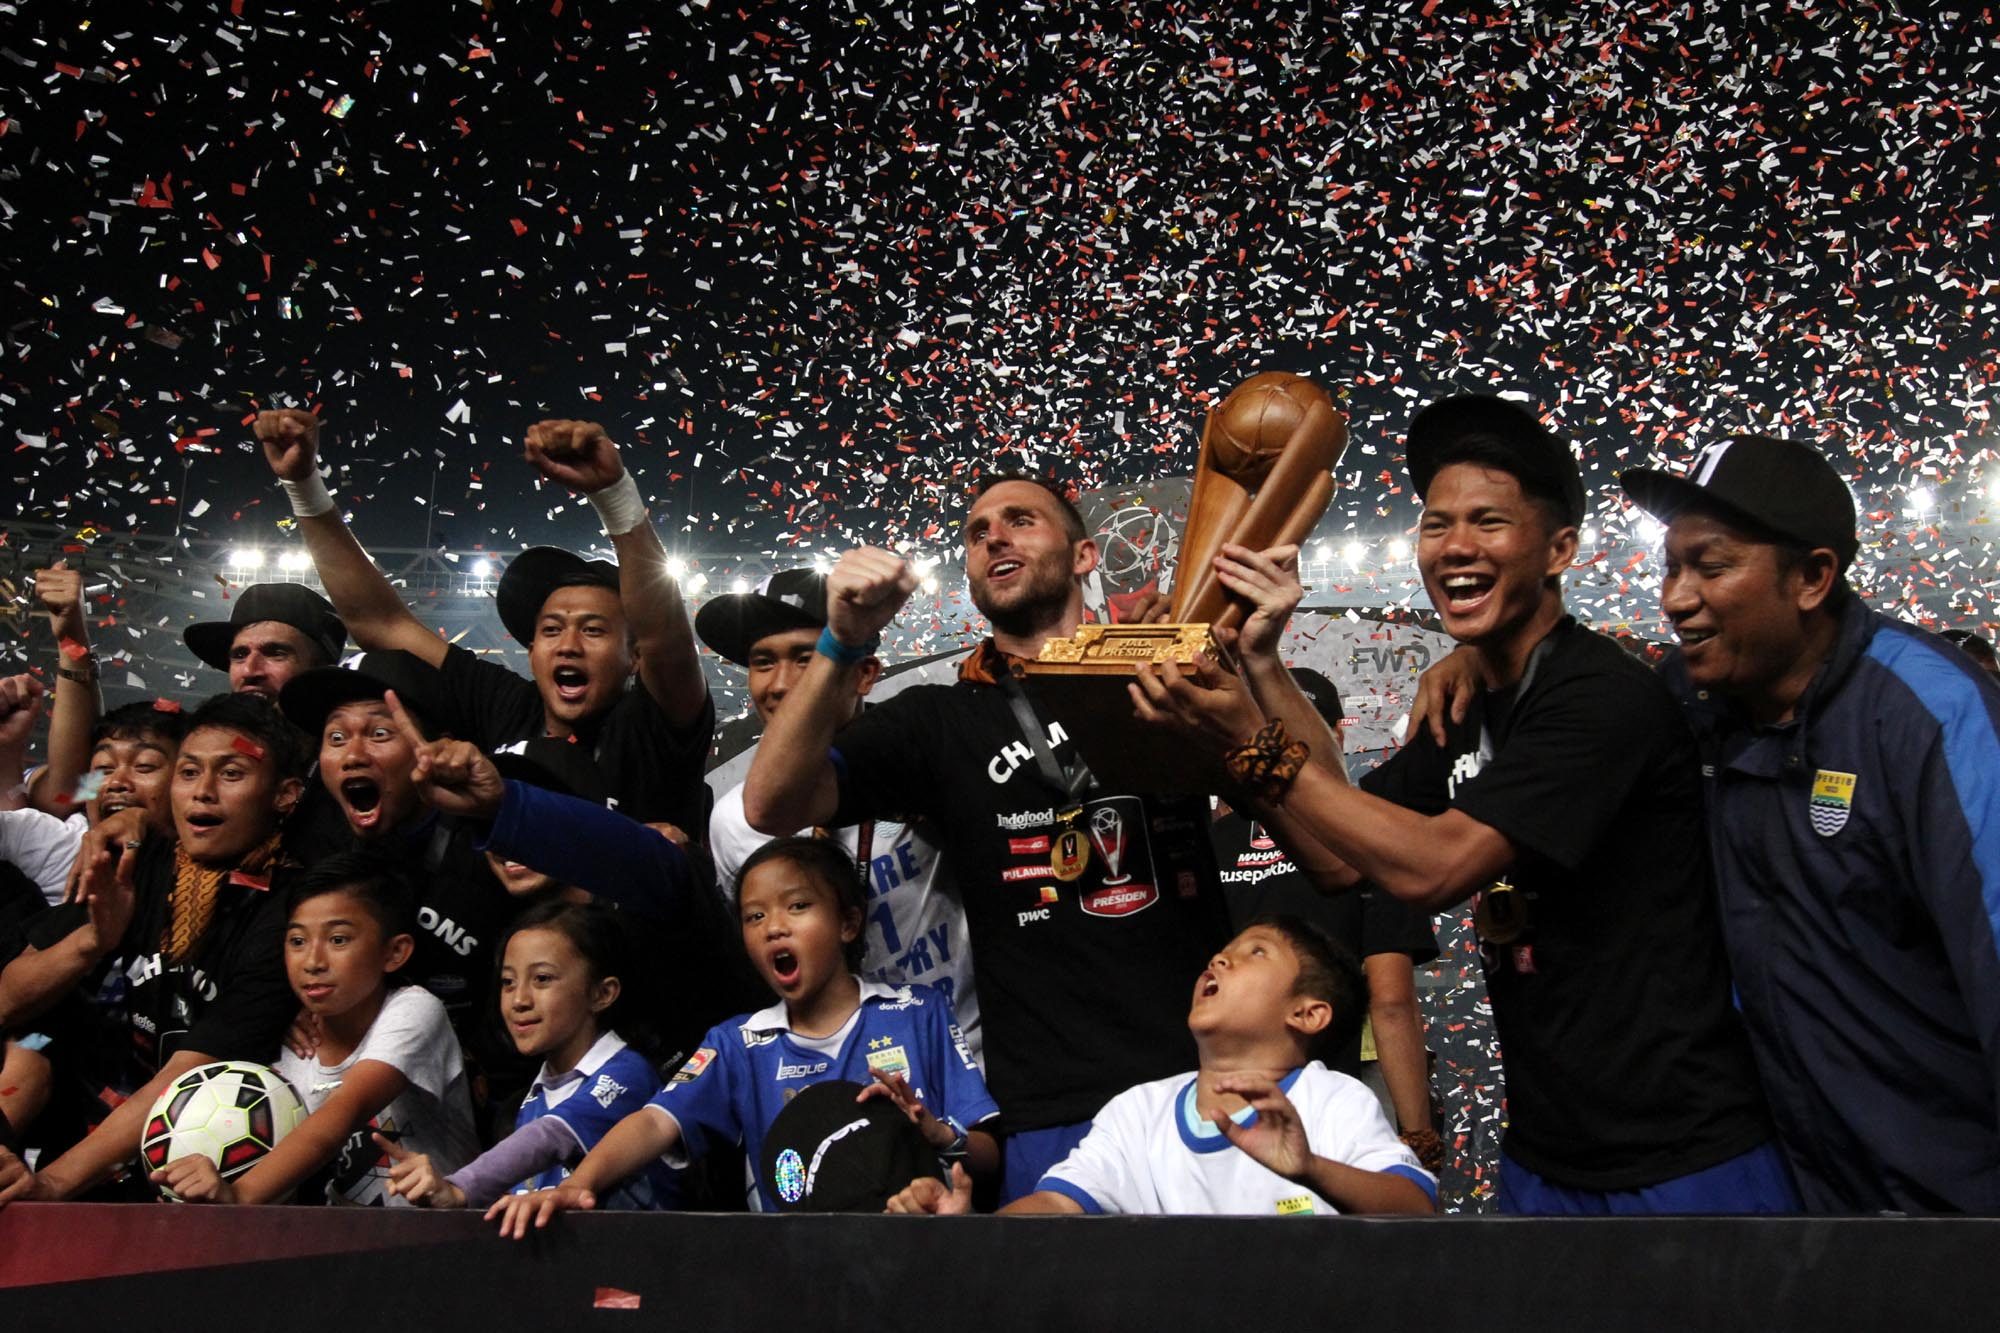 Kejar animo suporter, kick off Piala Jenderal Sudirman digelar di Malang